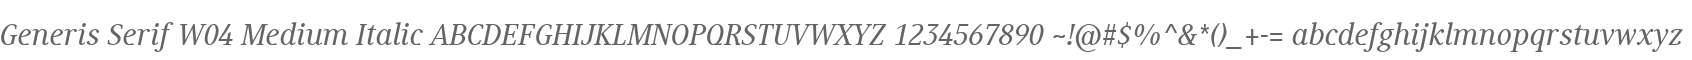 Generis Serif W04 Medium Italic